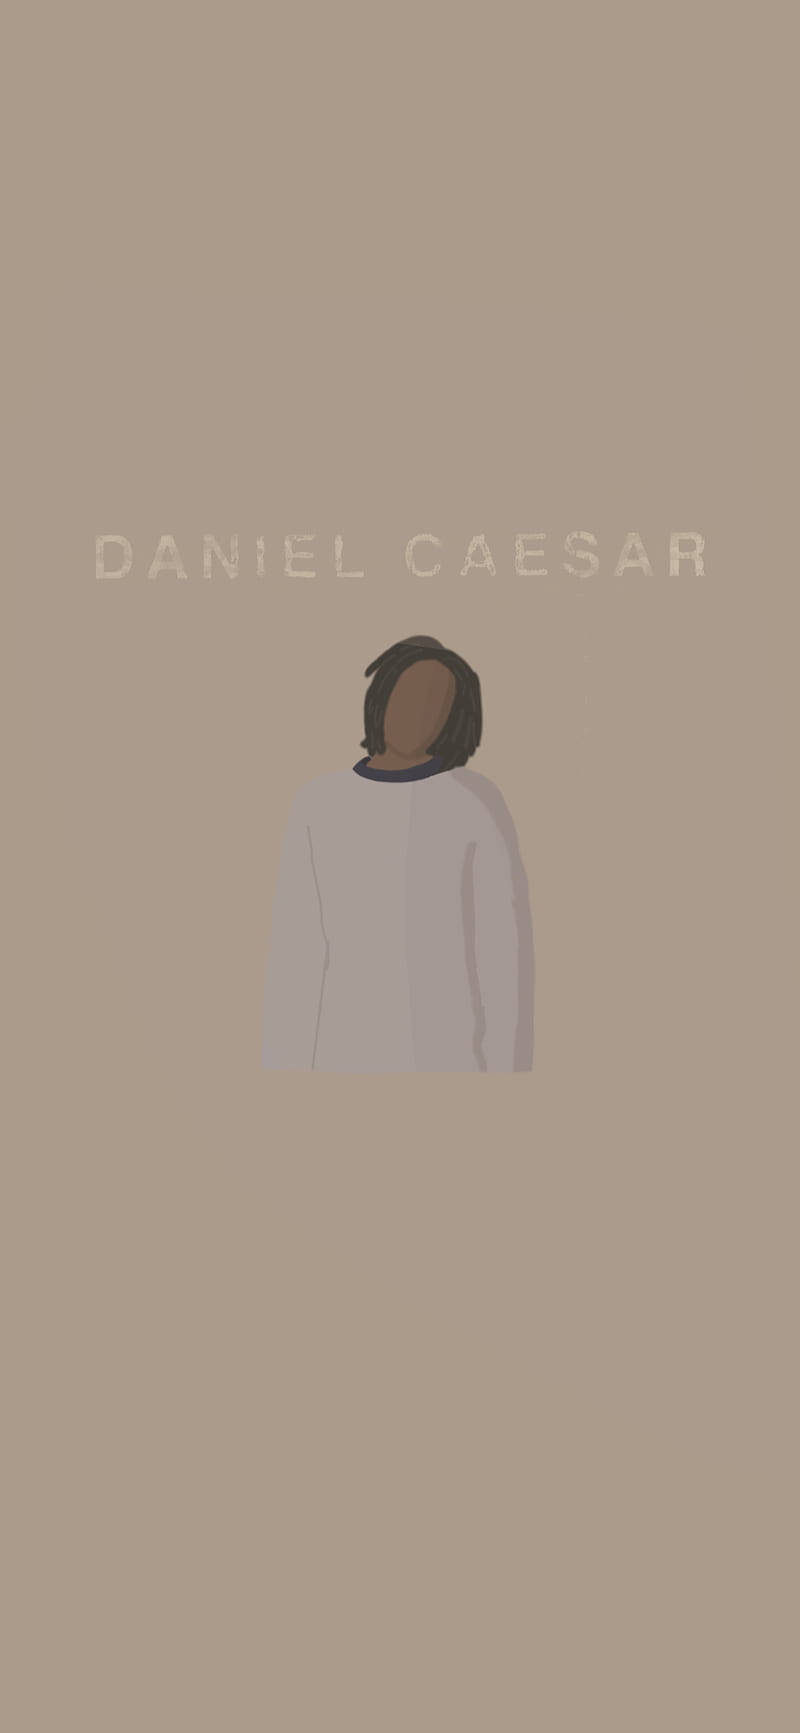 Daniel Caesar Minimalist Art Background